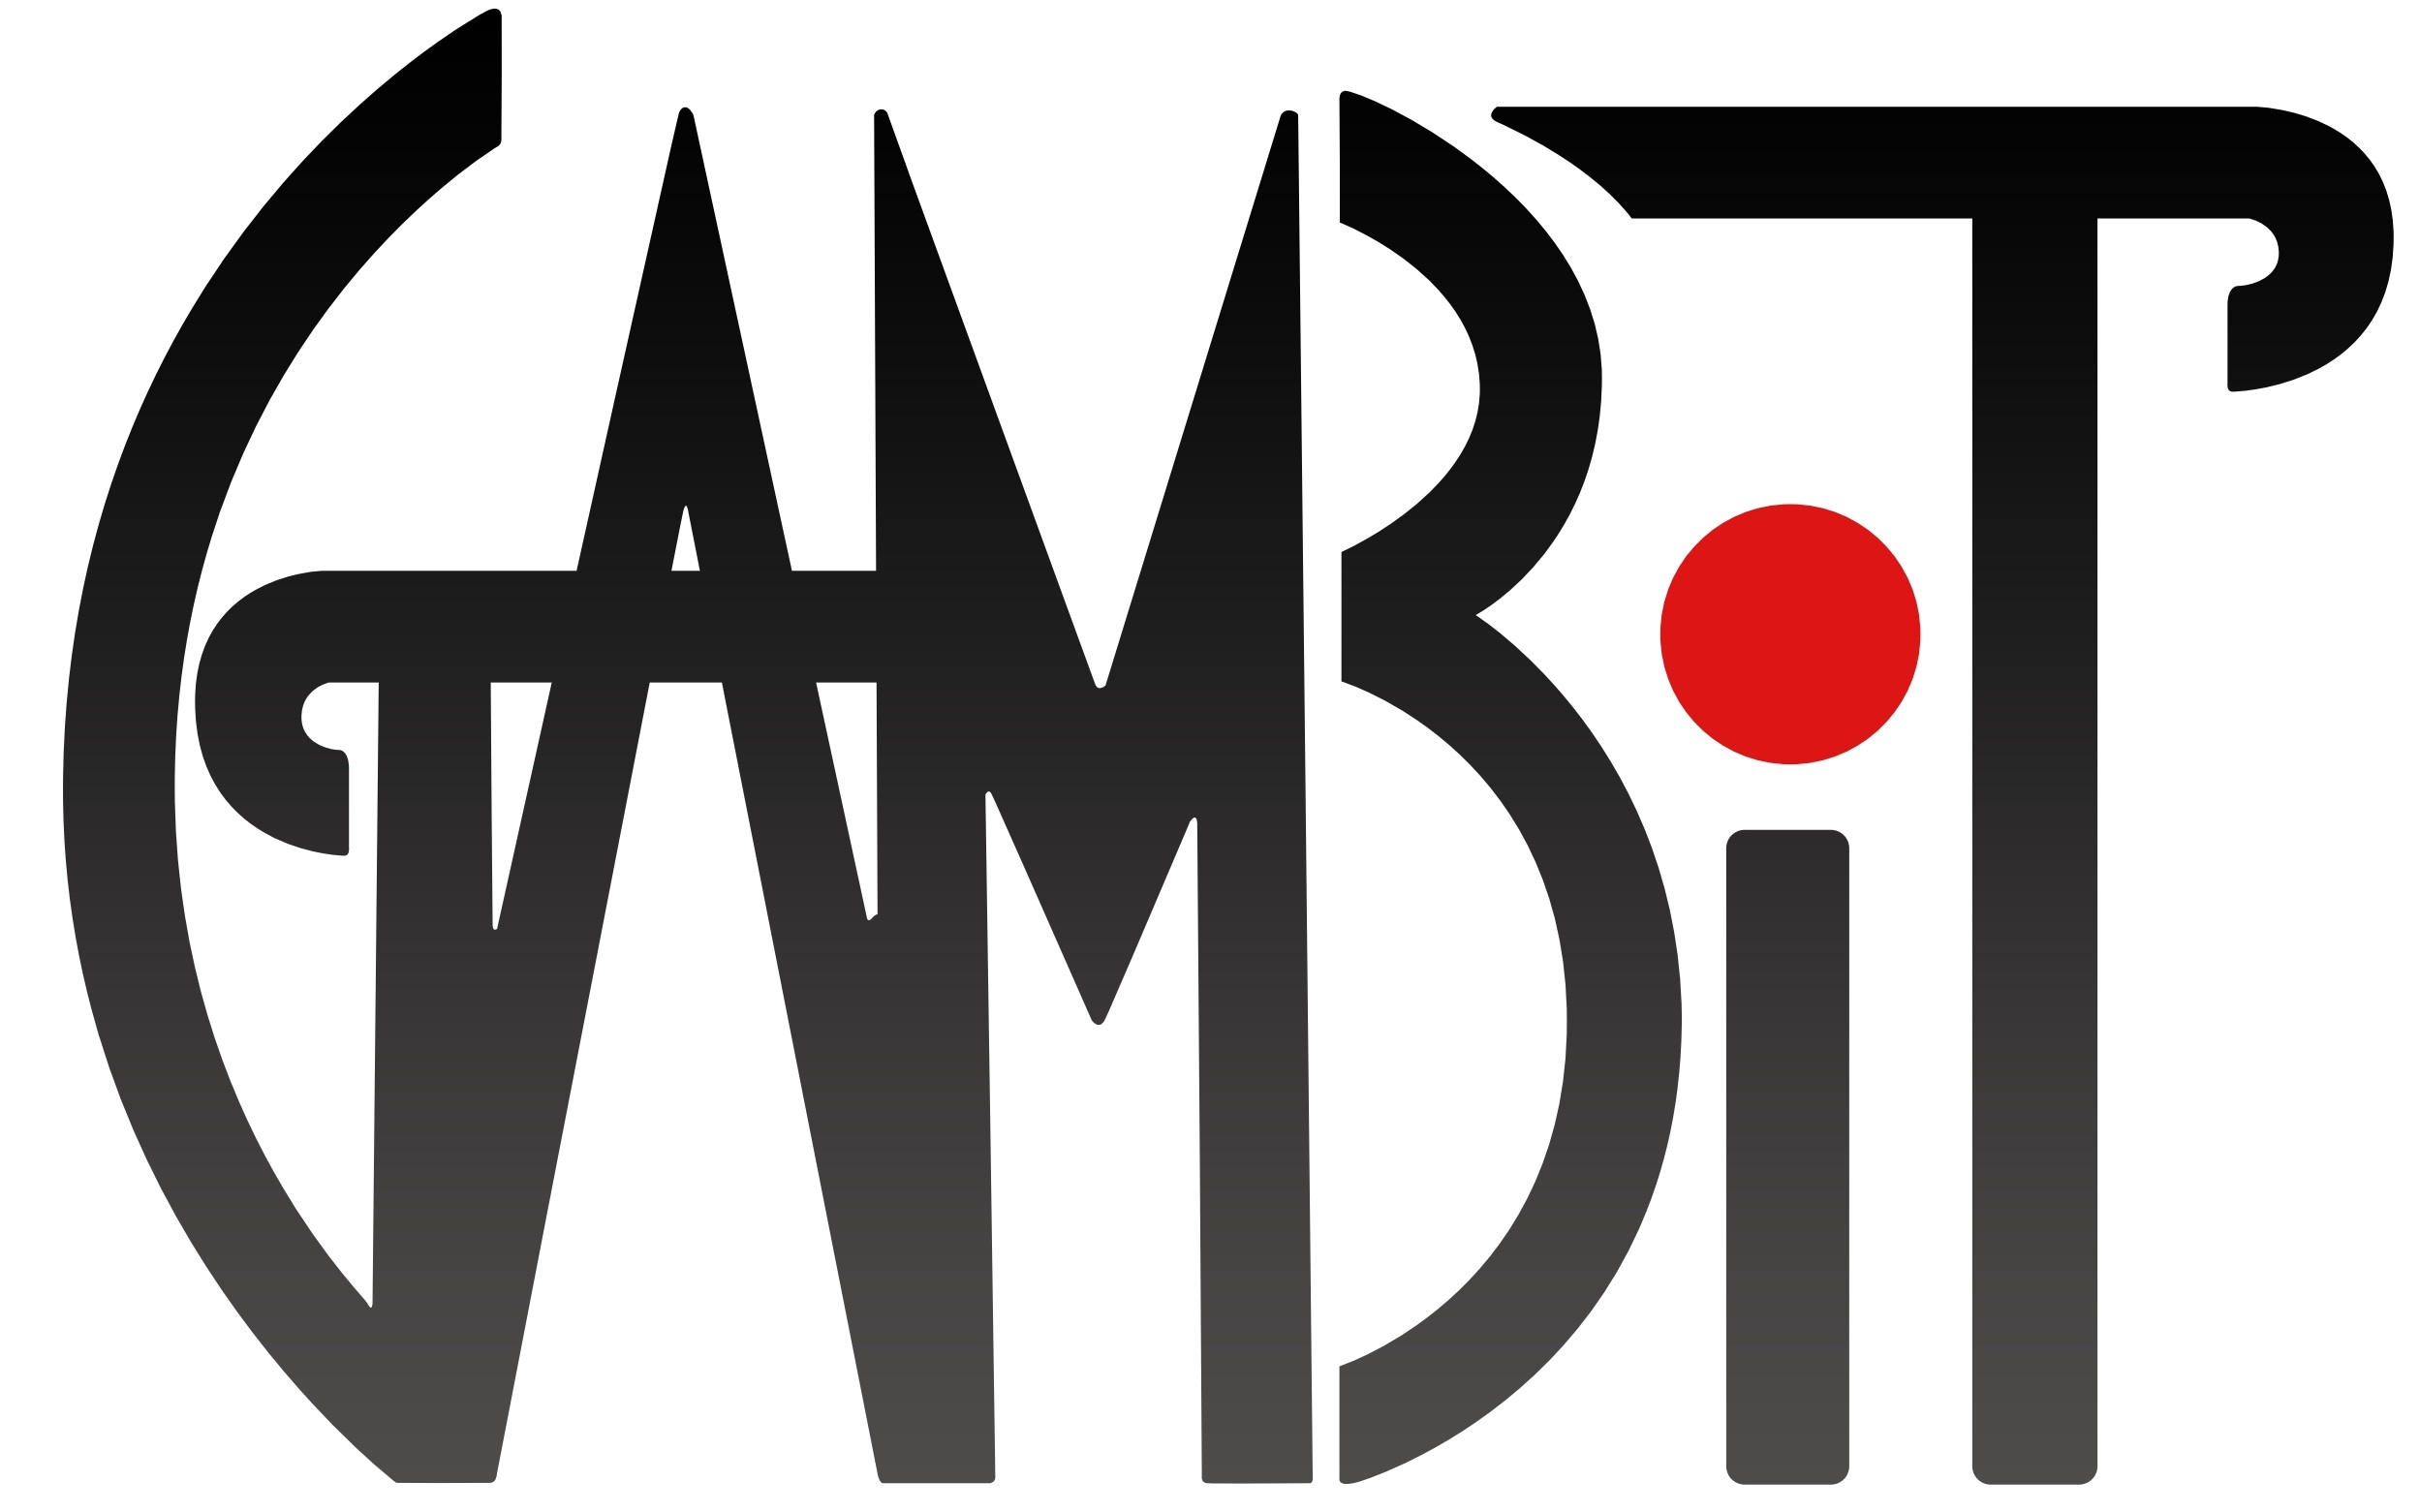 GAMBIT Logo.jpg df0e1db769ca69259bc5c807e062a1f8